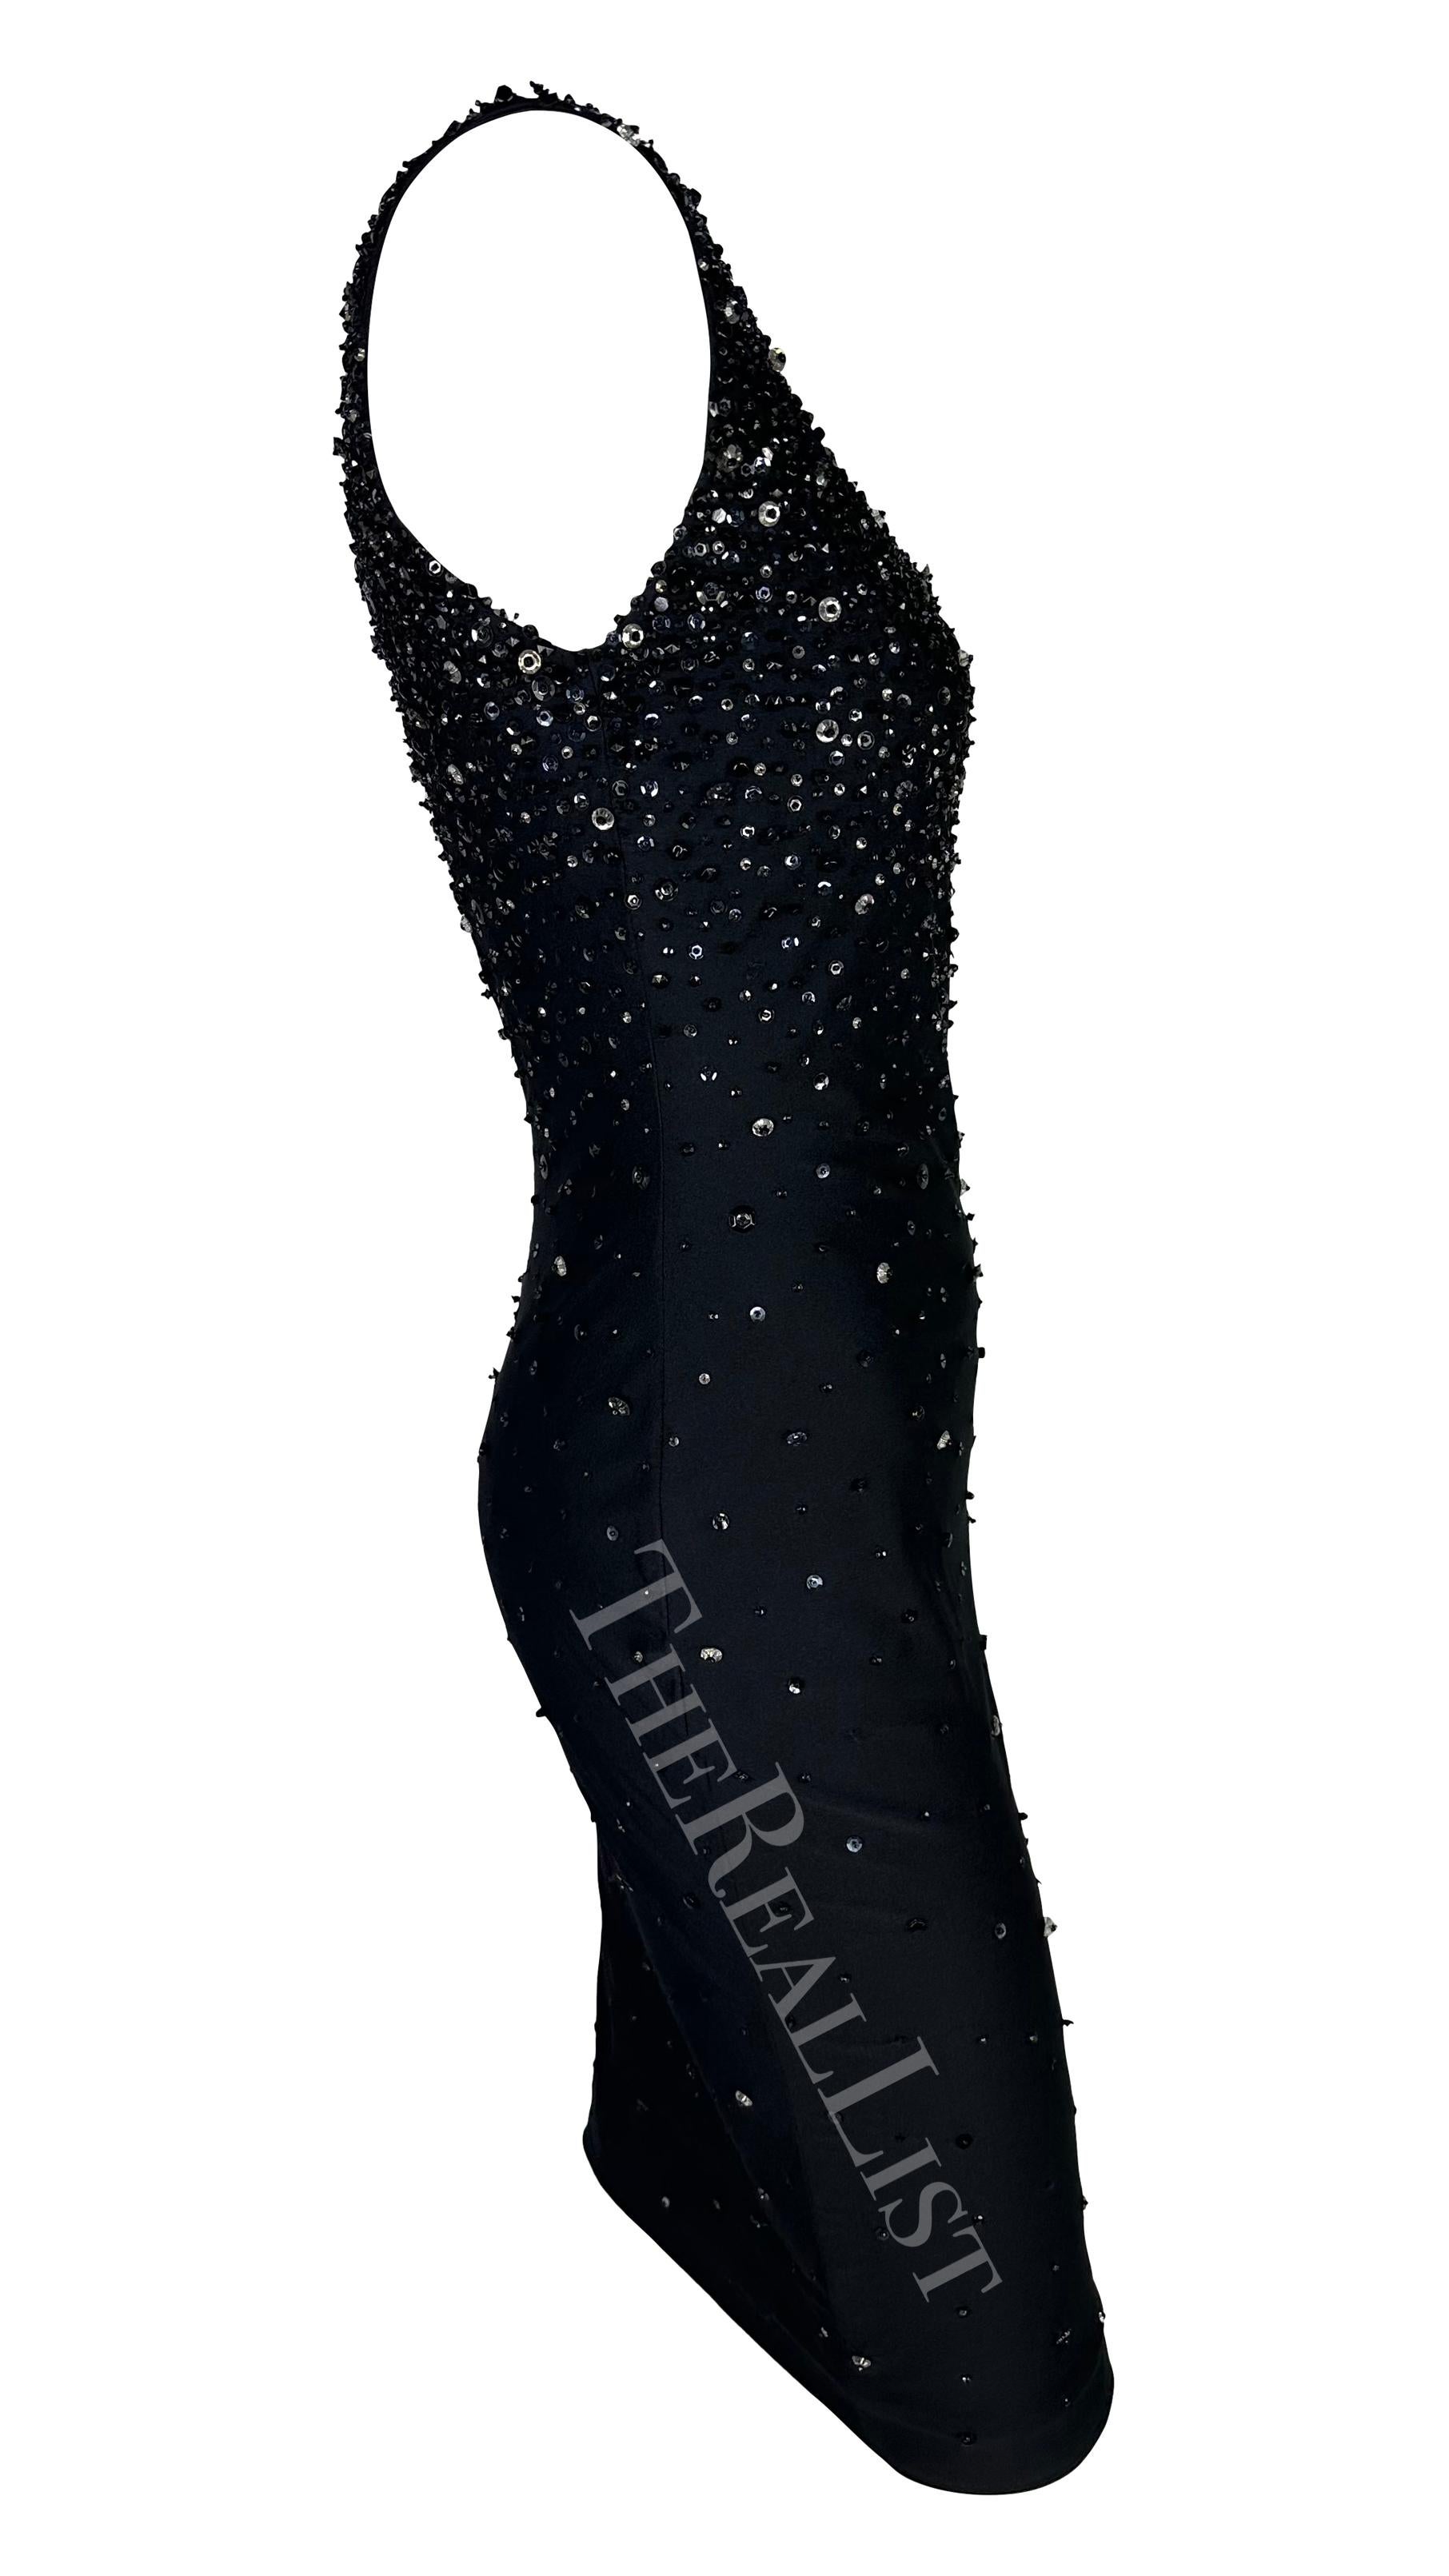 S/S 1996 Gianni Versace Black Beaded Sleeveless Bodycon Runway Dress For Sale 5